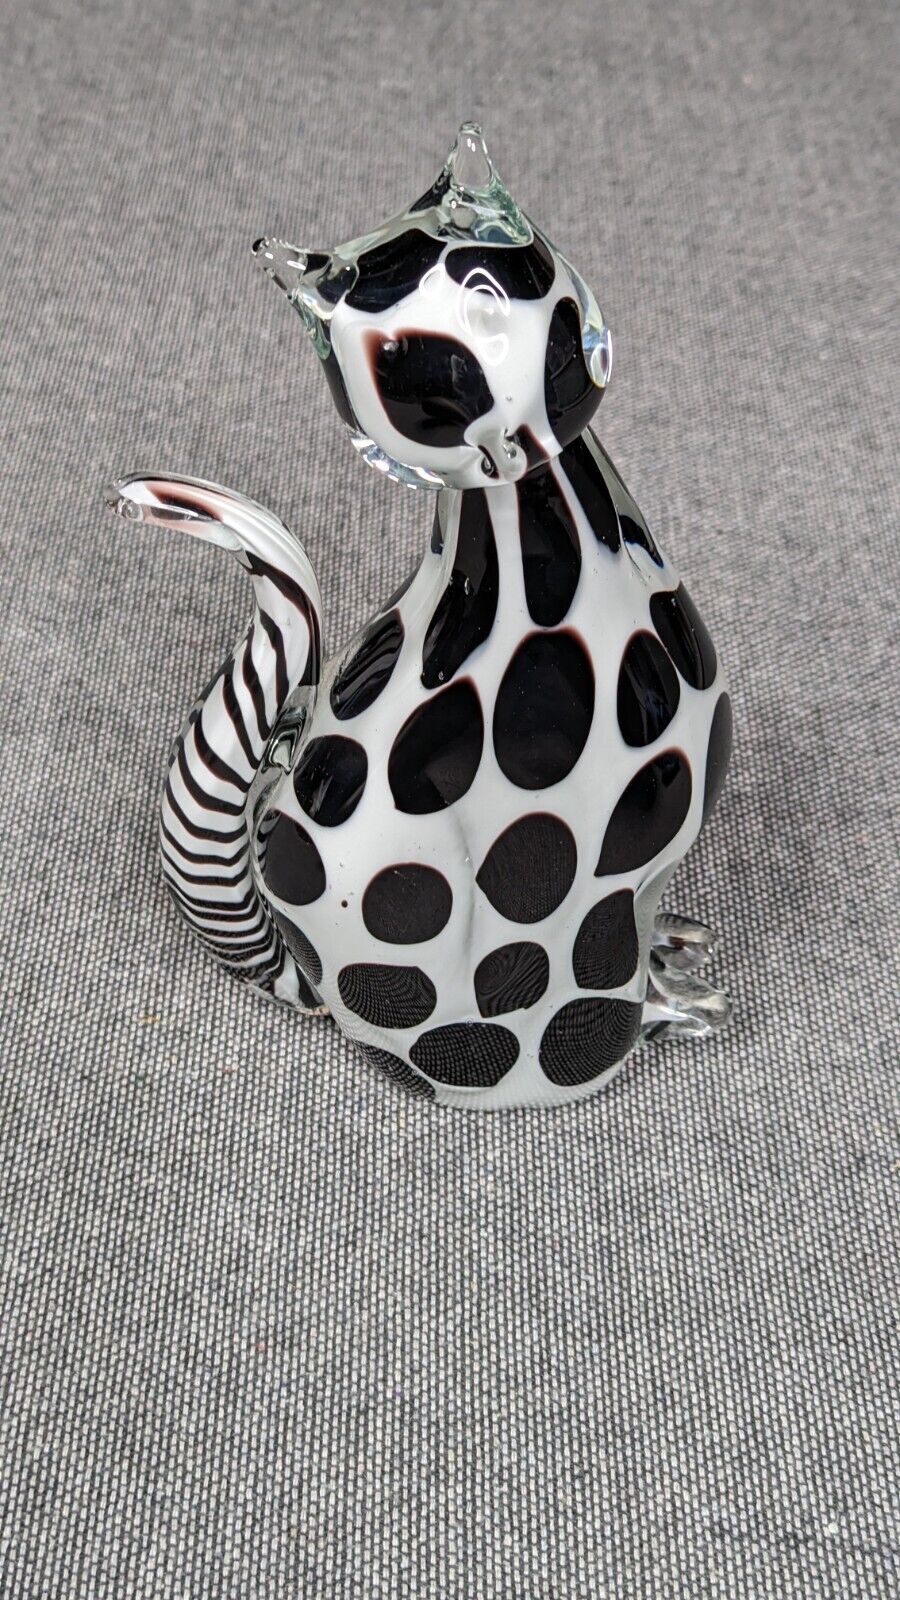 Stunning Vintage Art Glass Cat Figurine Black & White Spots Striped Tail 9.5 In.